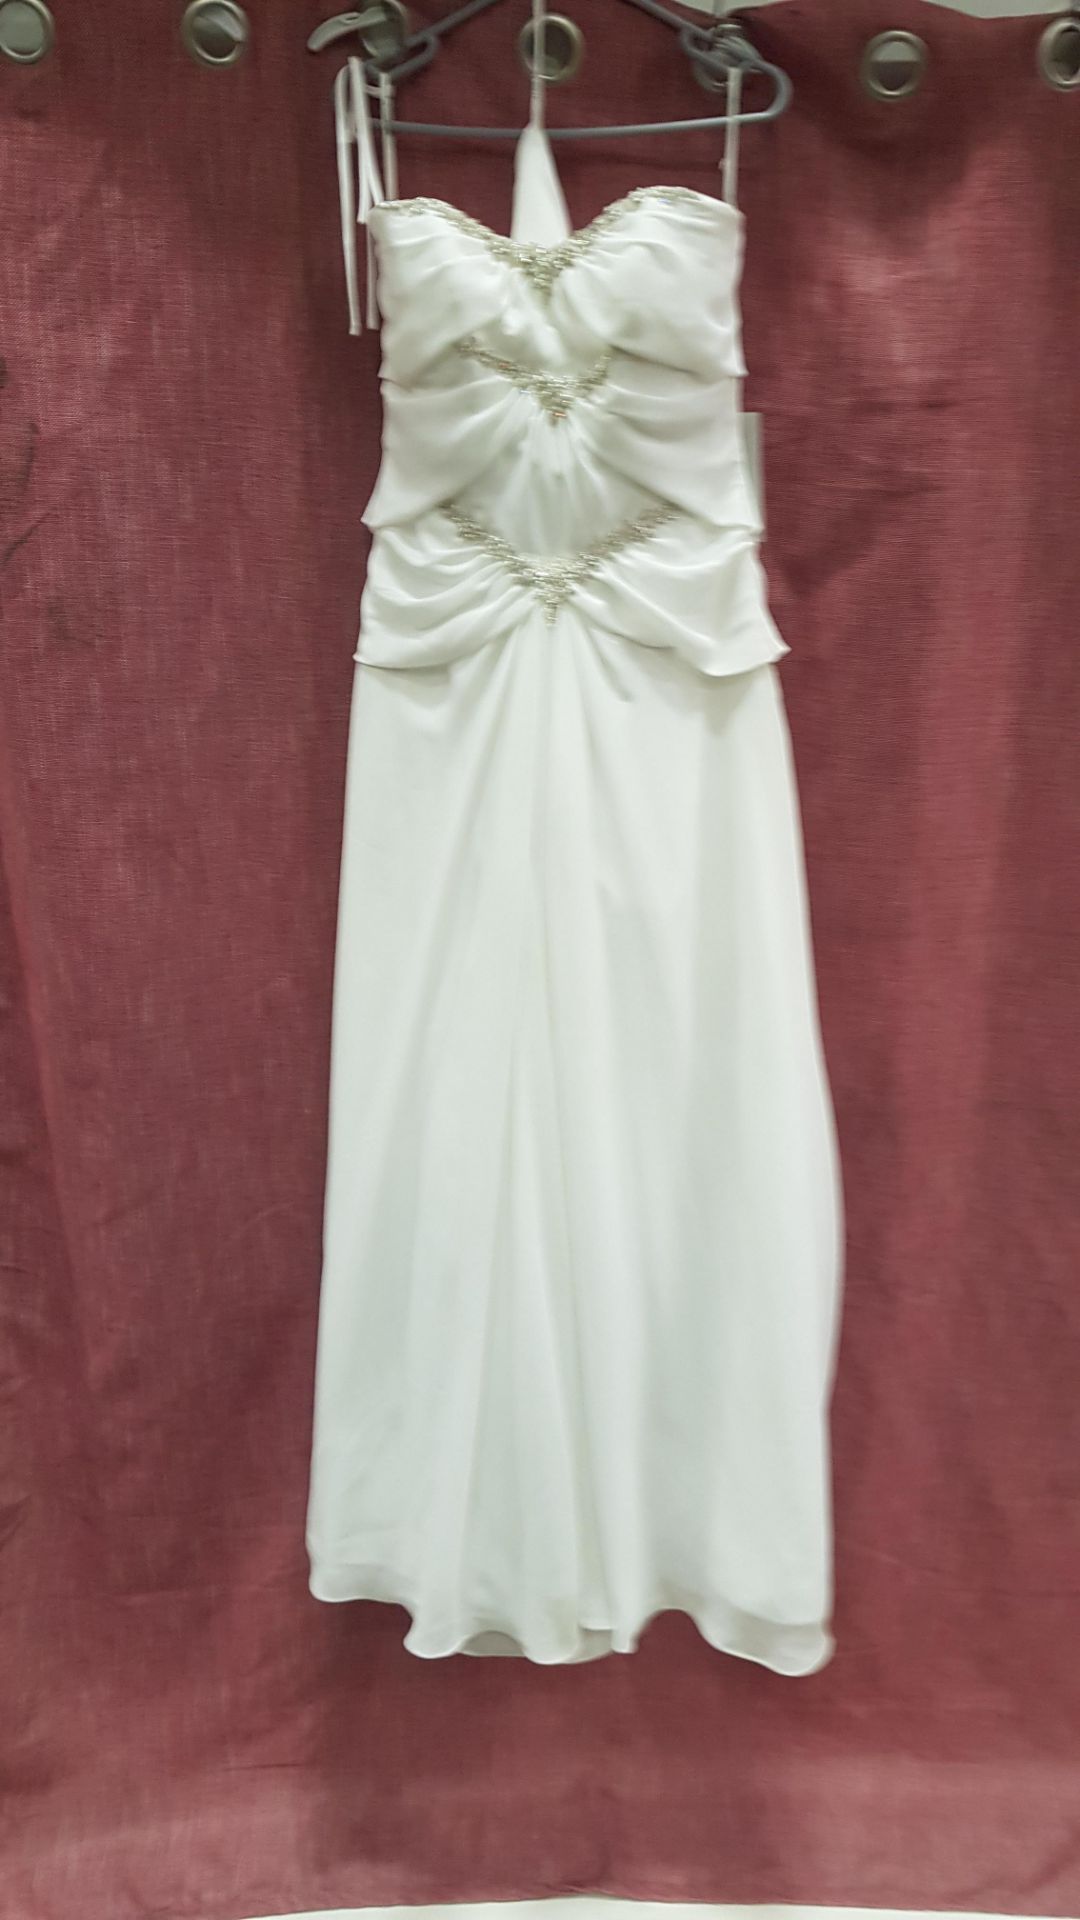 1 X SOPHIE TOLLIE WEDDING DRESS SIZE 16